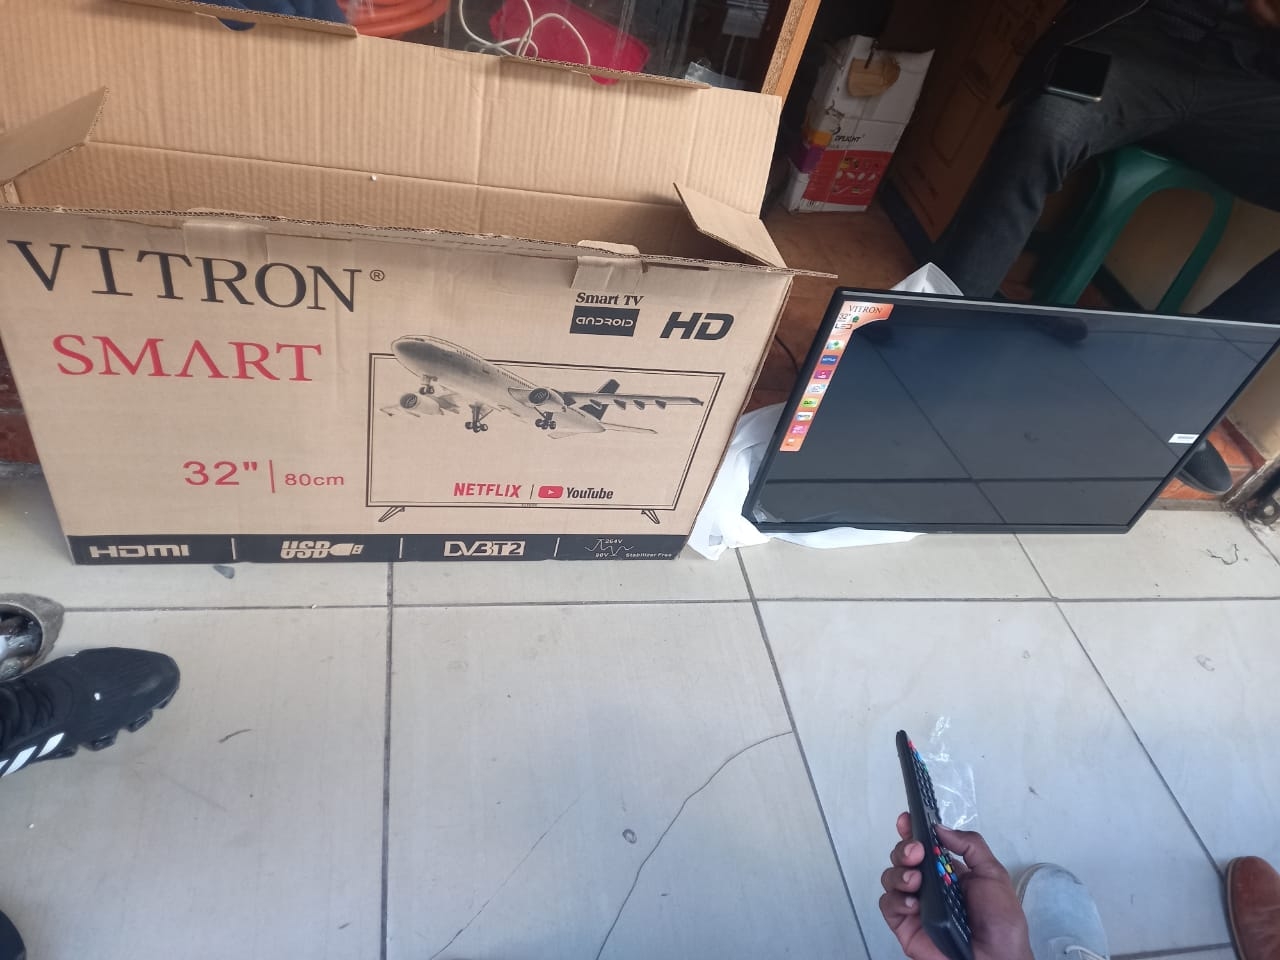 Vitron Tv 40 inch